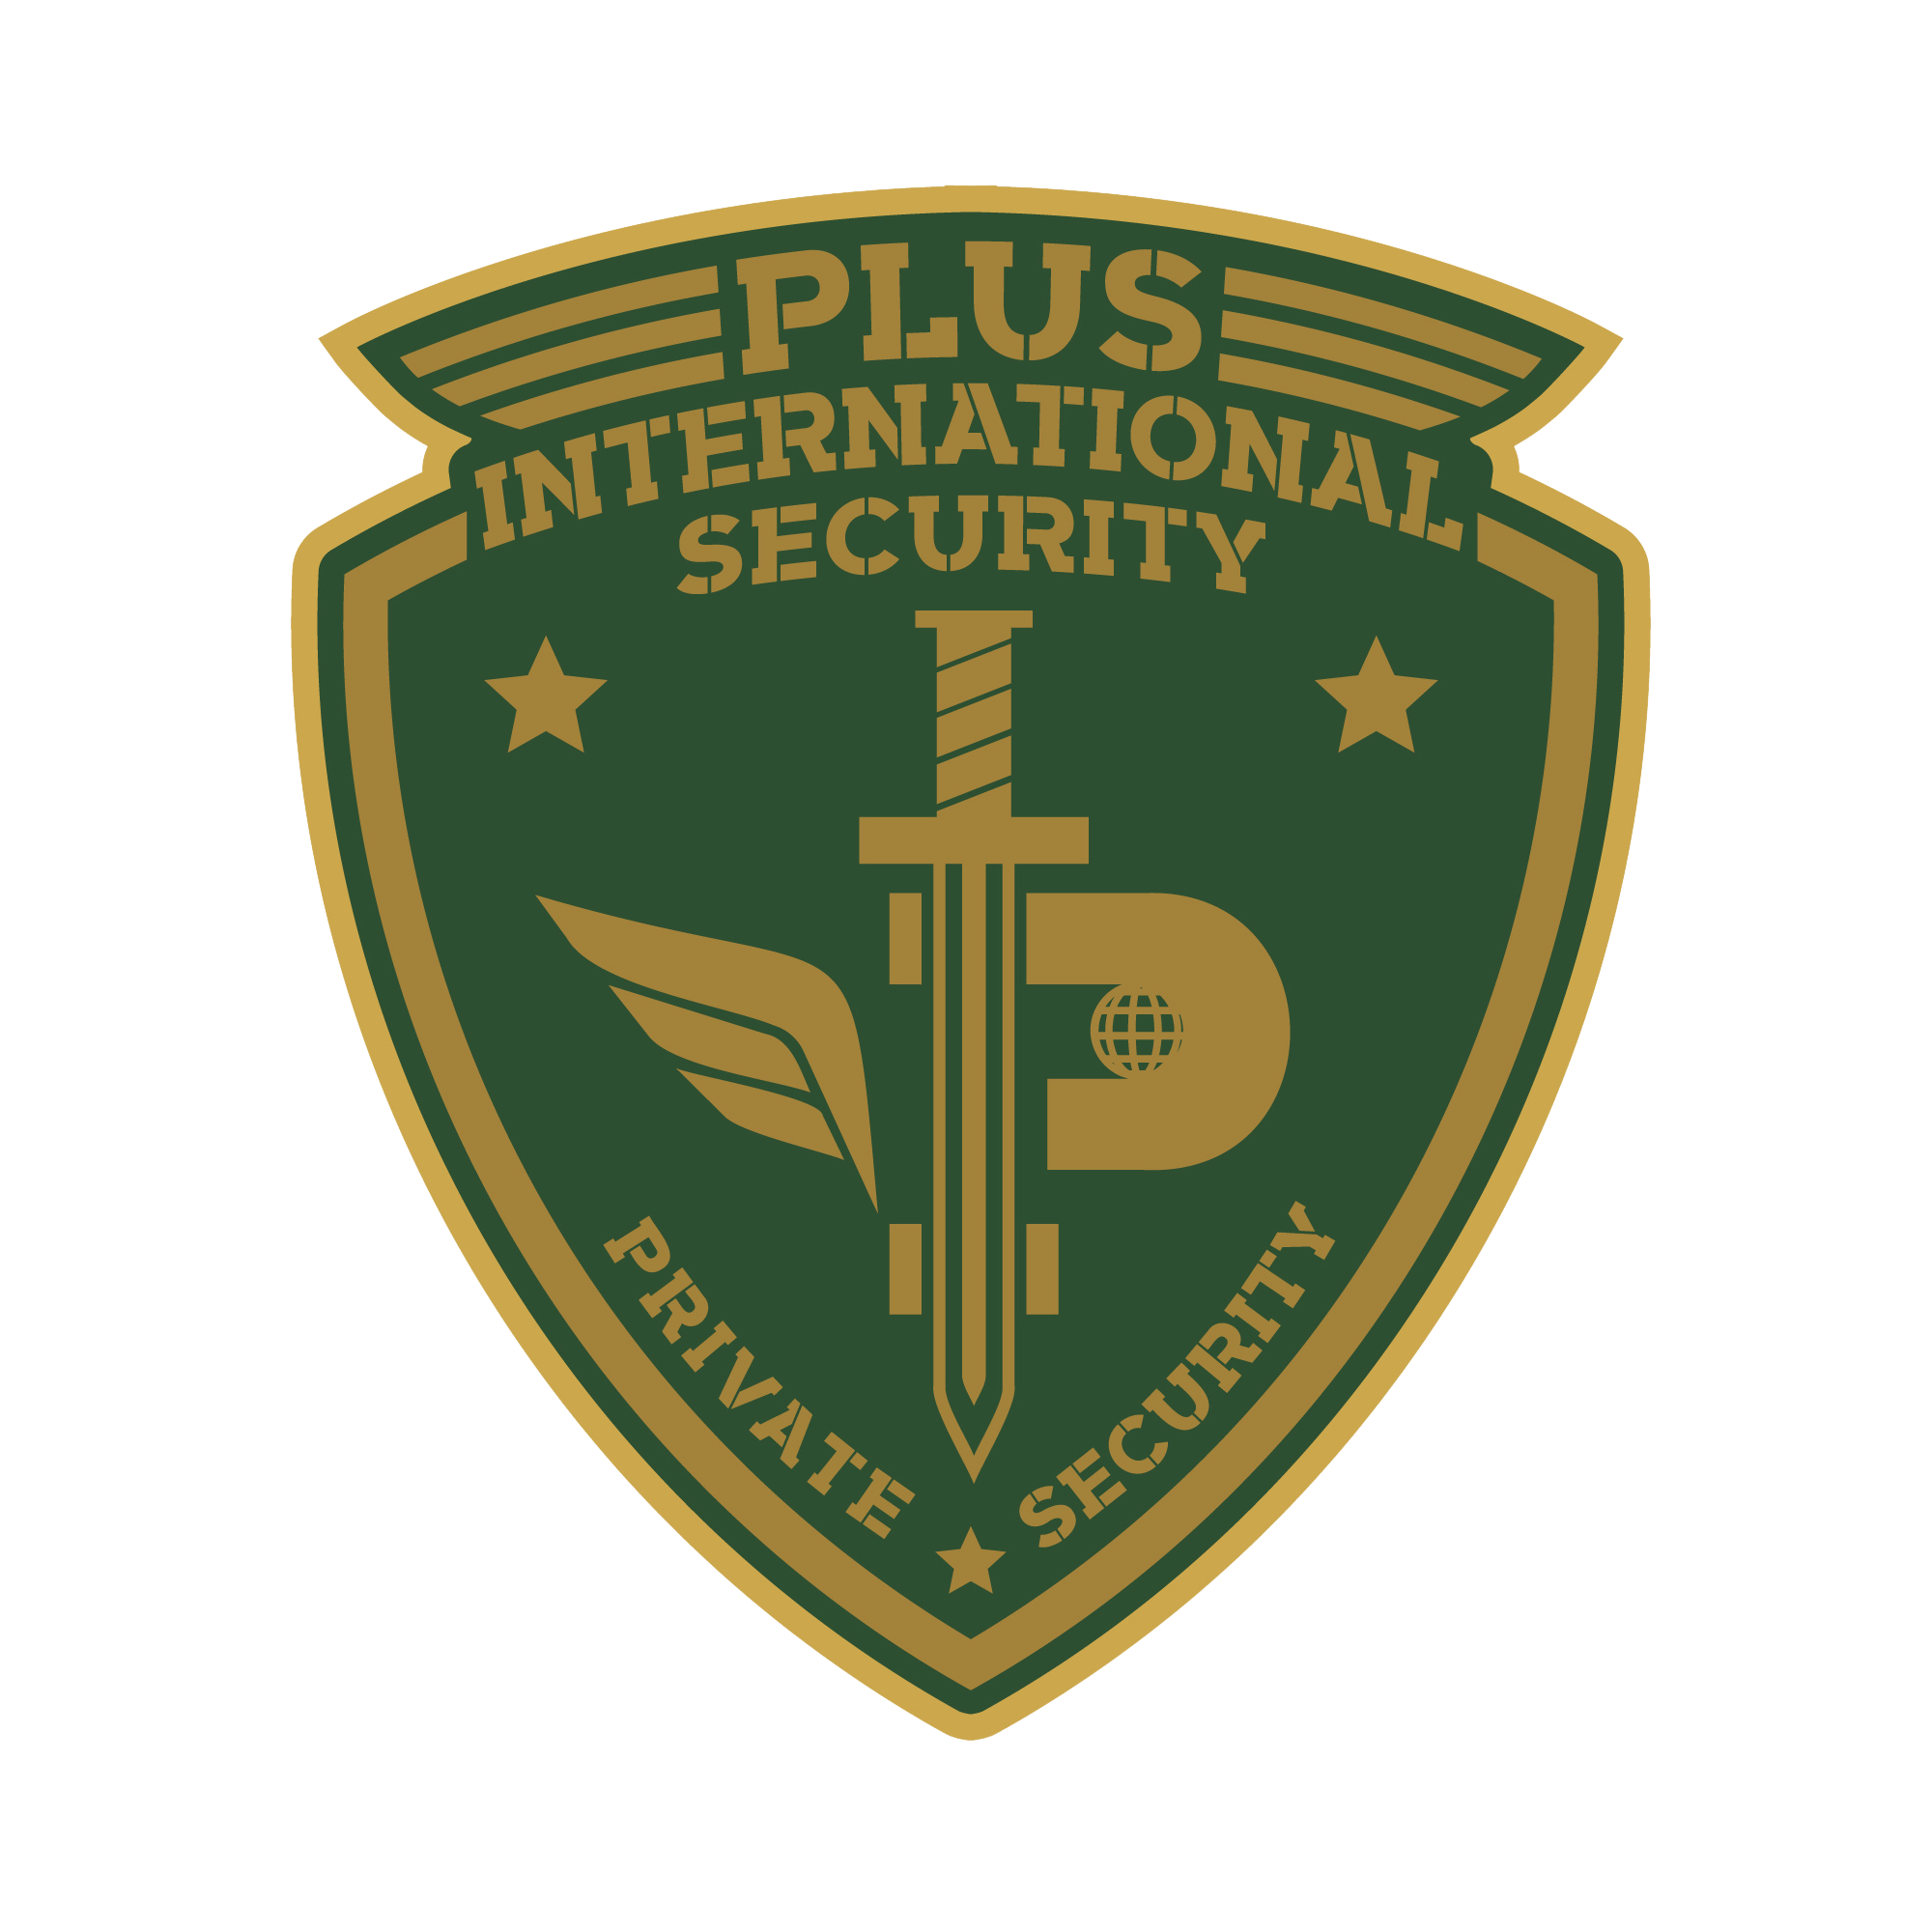 Plus International Security - logo.png